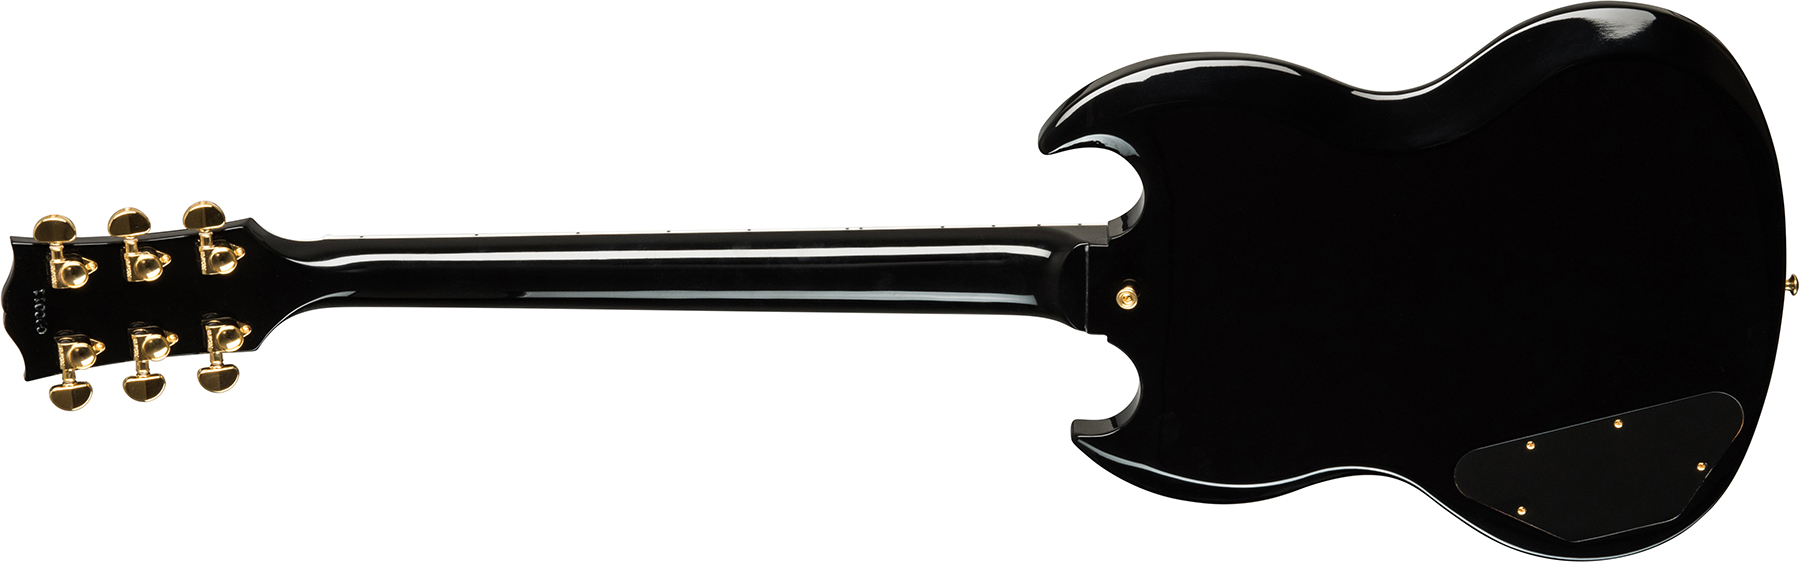 Gibson Custom Shop Sg Custom 2-pickup 2019 2h Ht Eb - Ebony - Double cut electric guitar - Variation 1